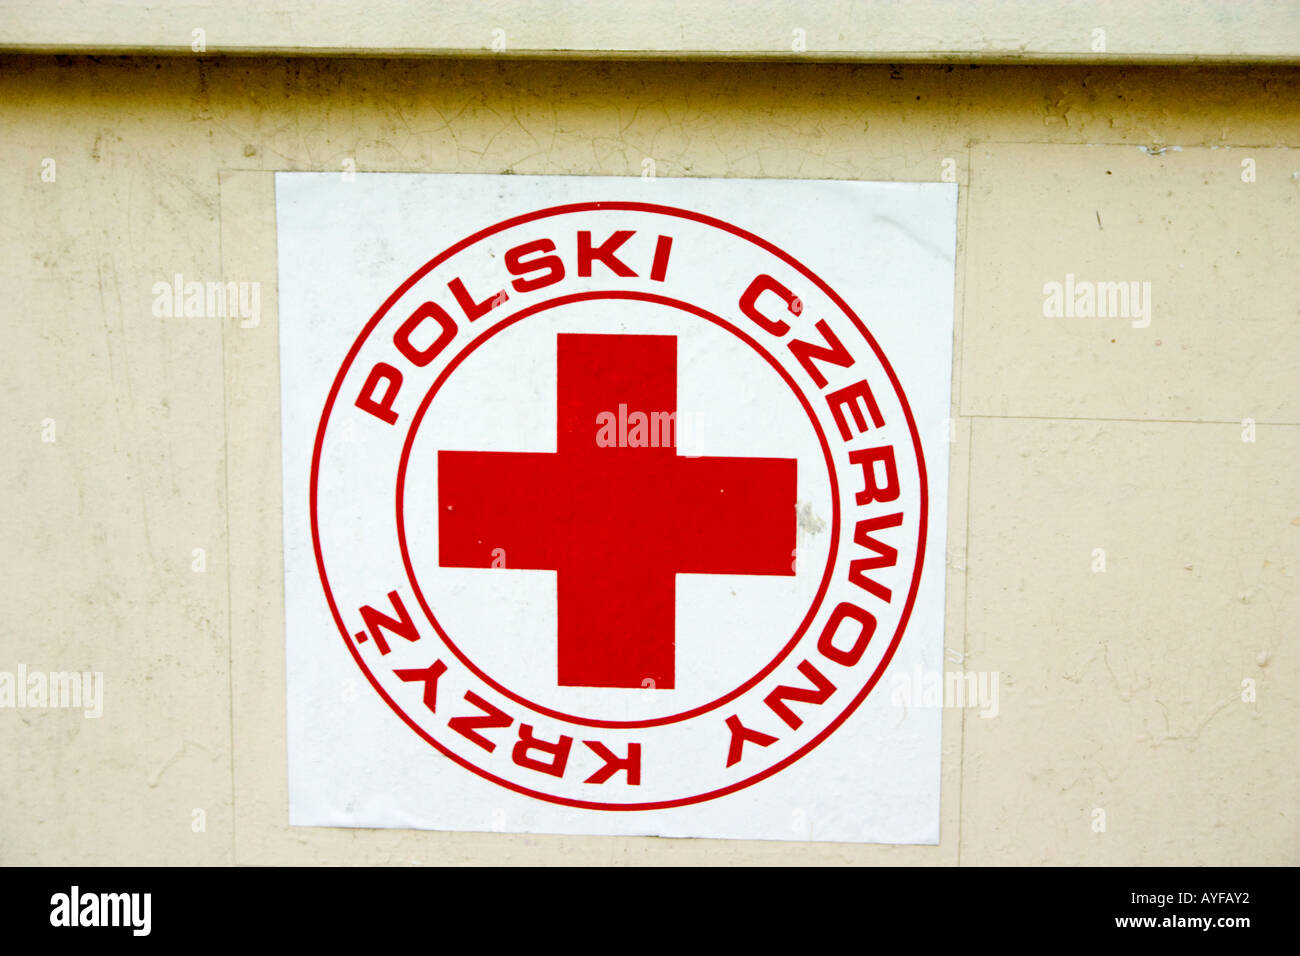 abort Kontur aIDS Red Cross symbol on clothing recycling bin. Lodz Central Poland Stock Photo  - Alamy